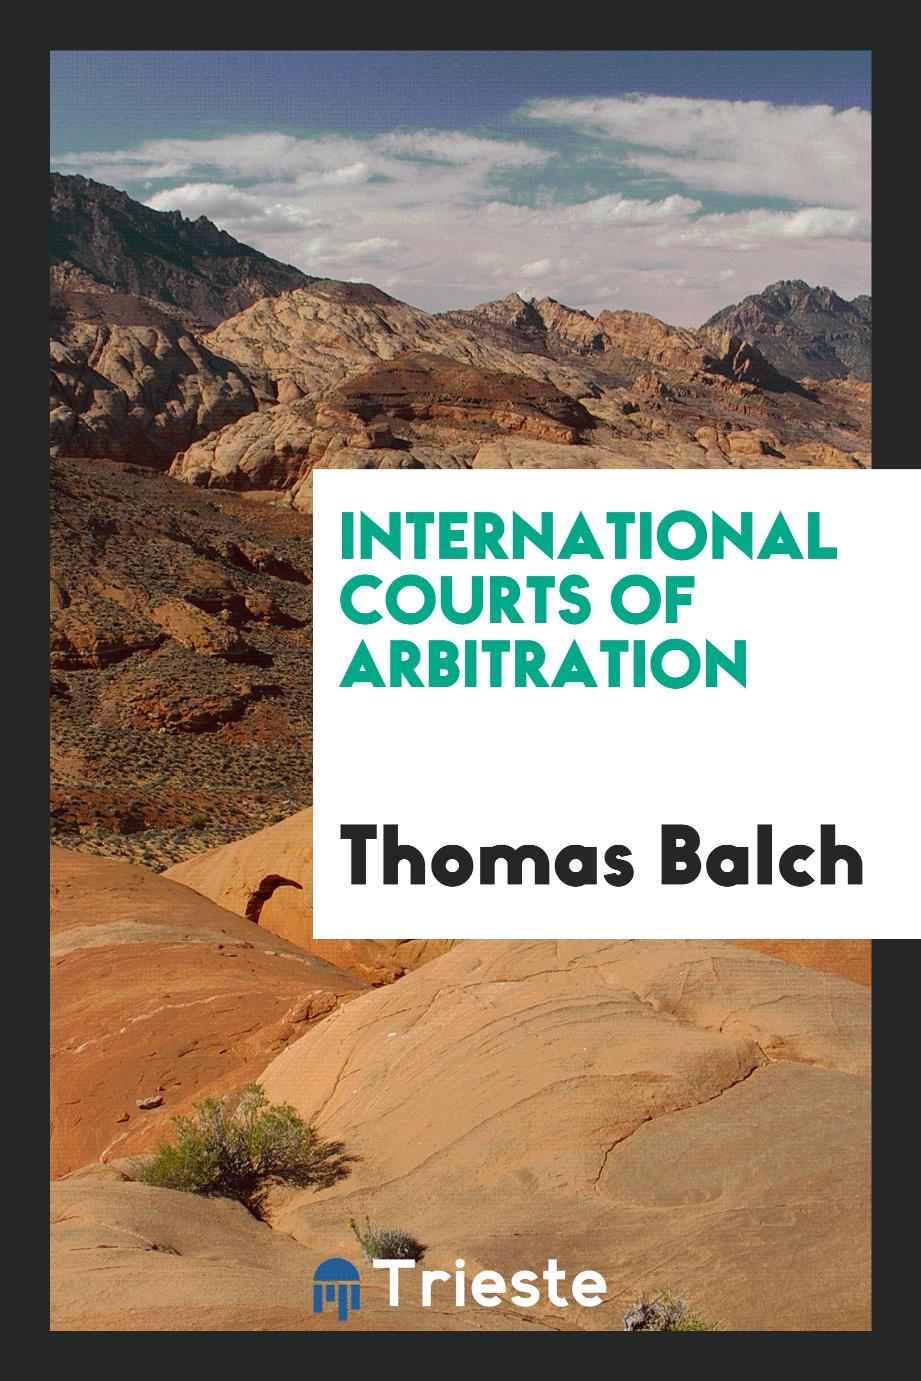 International Courts of Arbitration